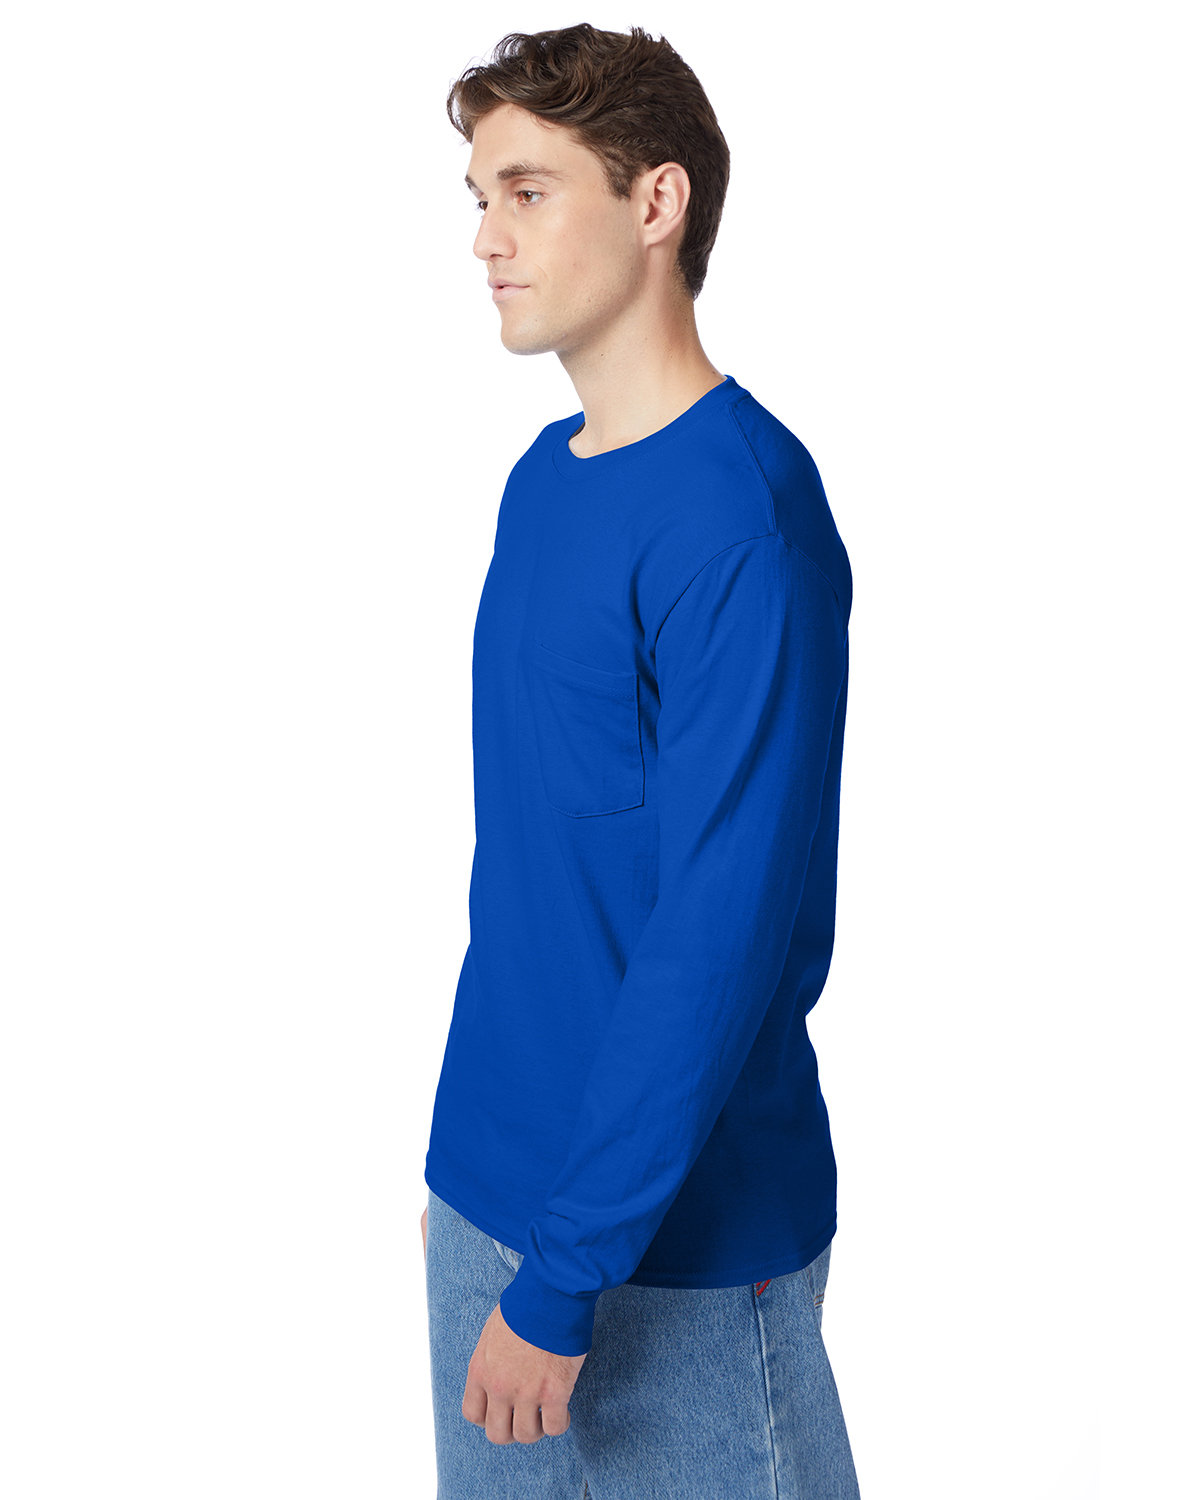 Hanes Men's Authentic-T Long-Sleeve Pocket T-Shirt DEEP ROYAL 